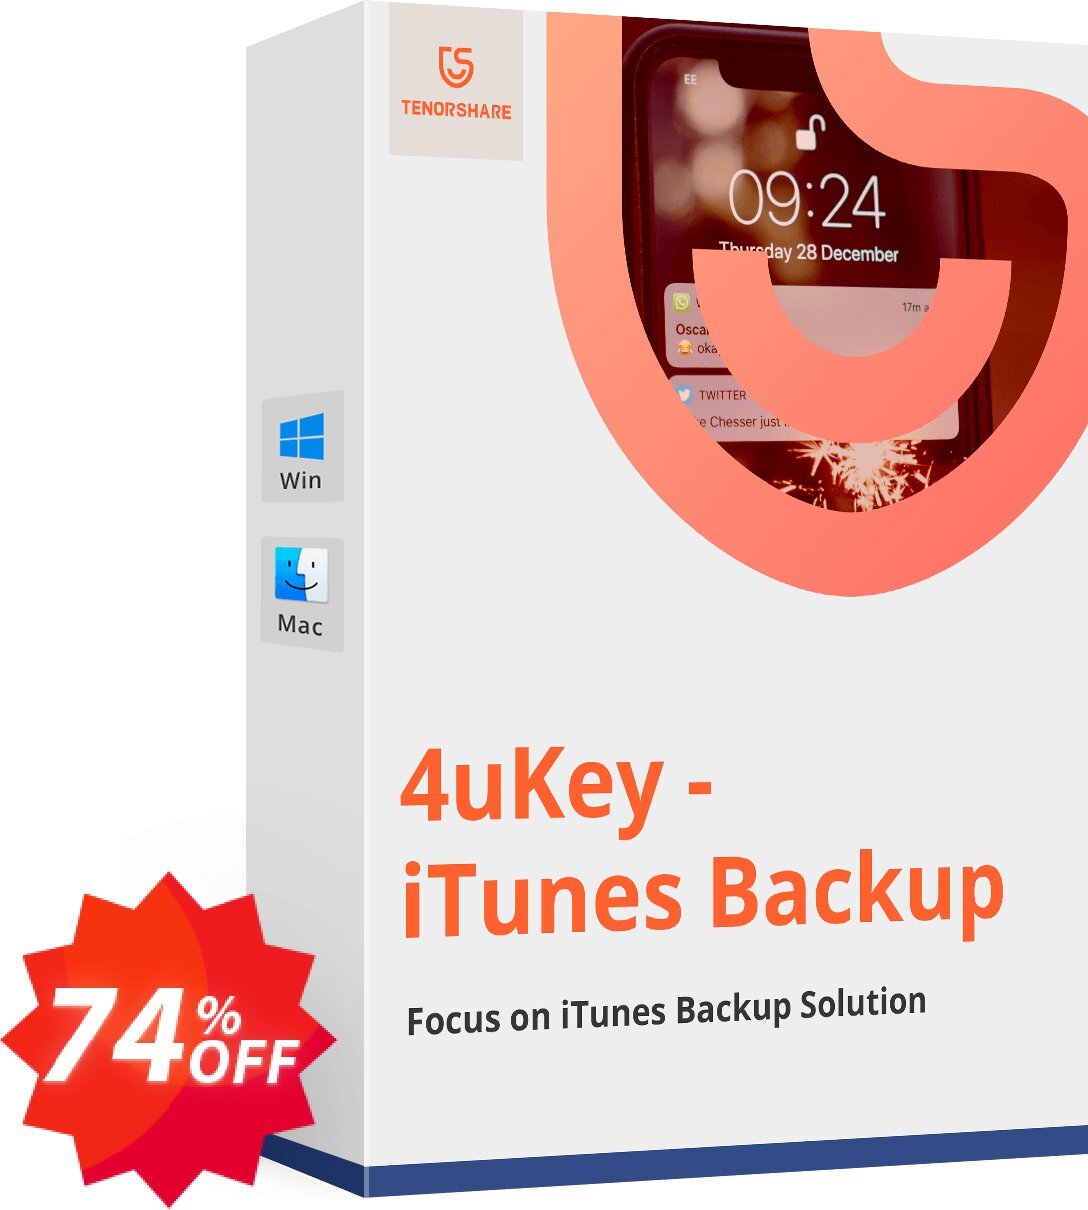 Tenorshare 4uKey iTunes Backup Coupon code 74% discount 